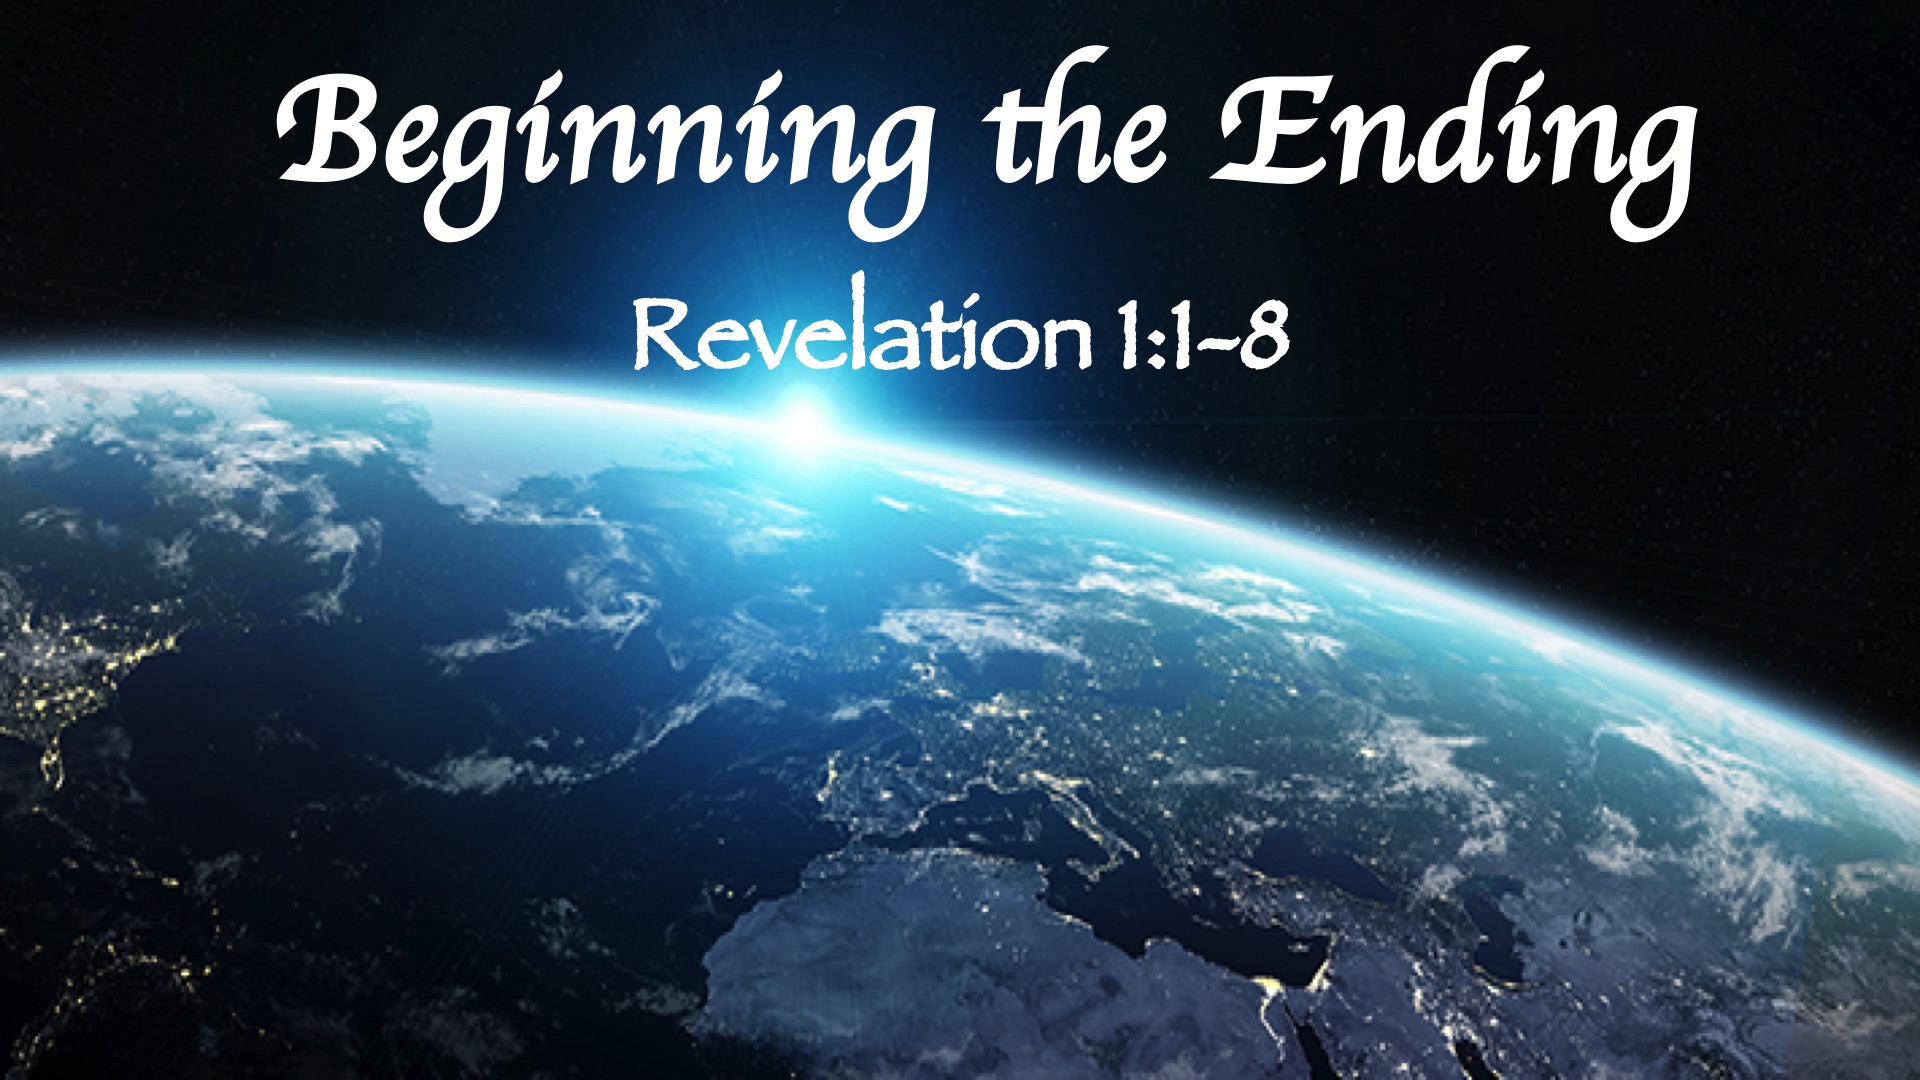 The Book of Revelation: Beginning the Ending